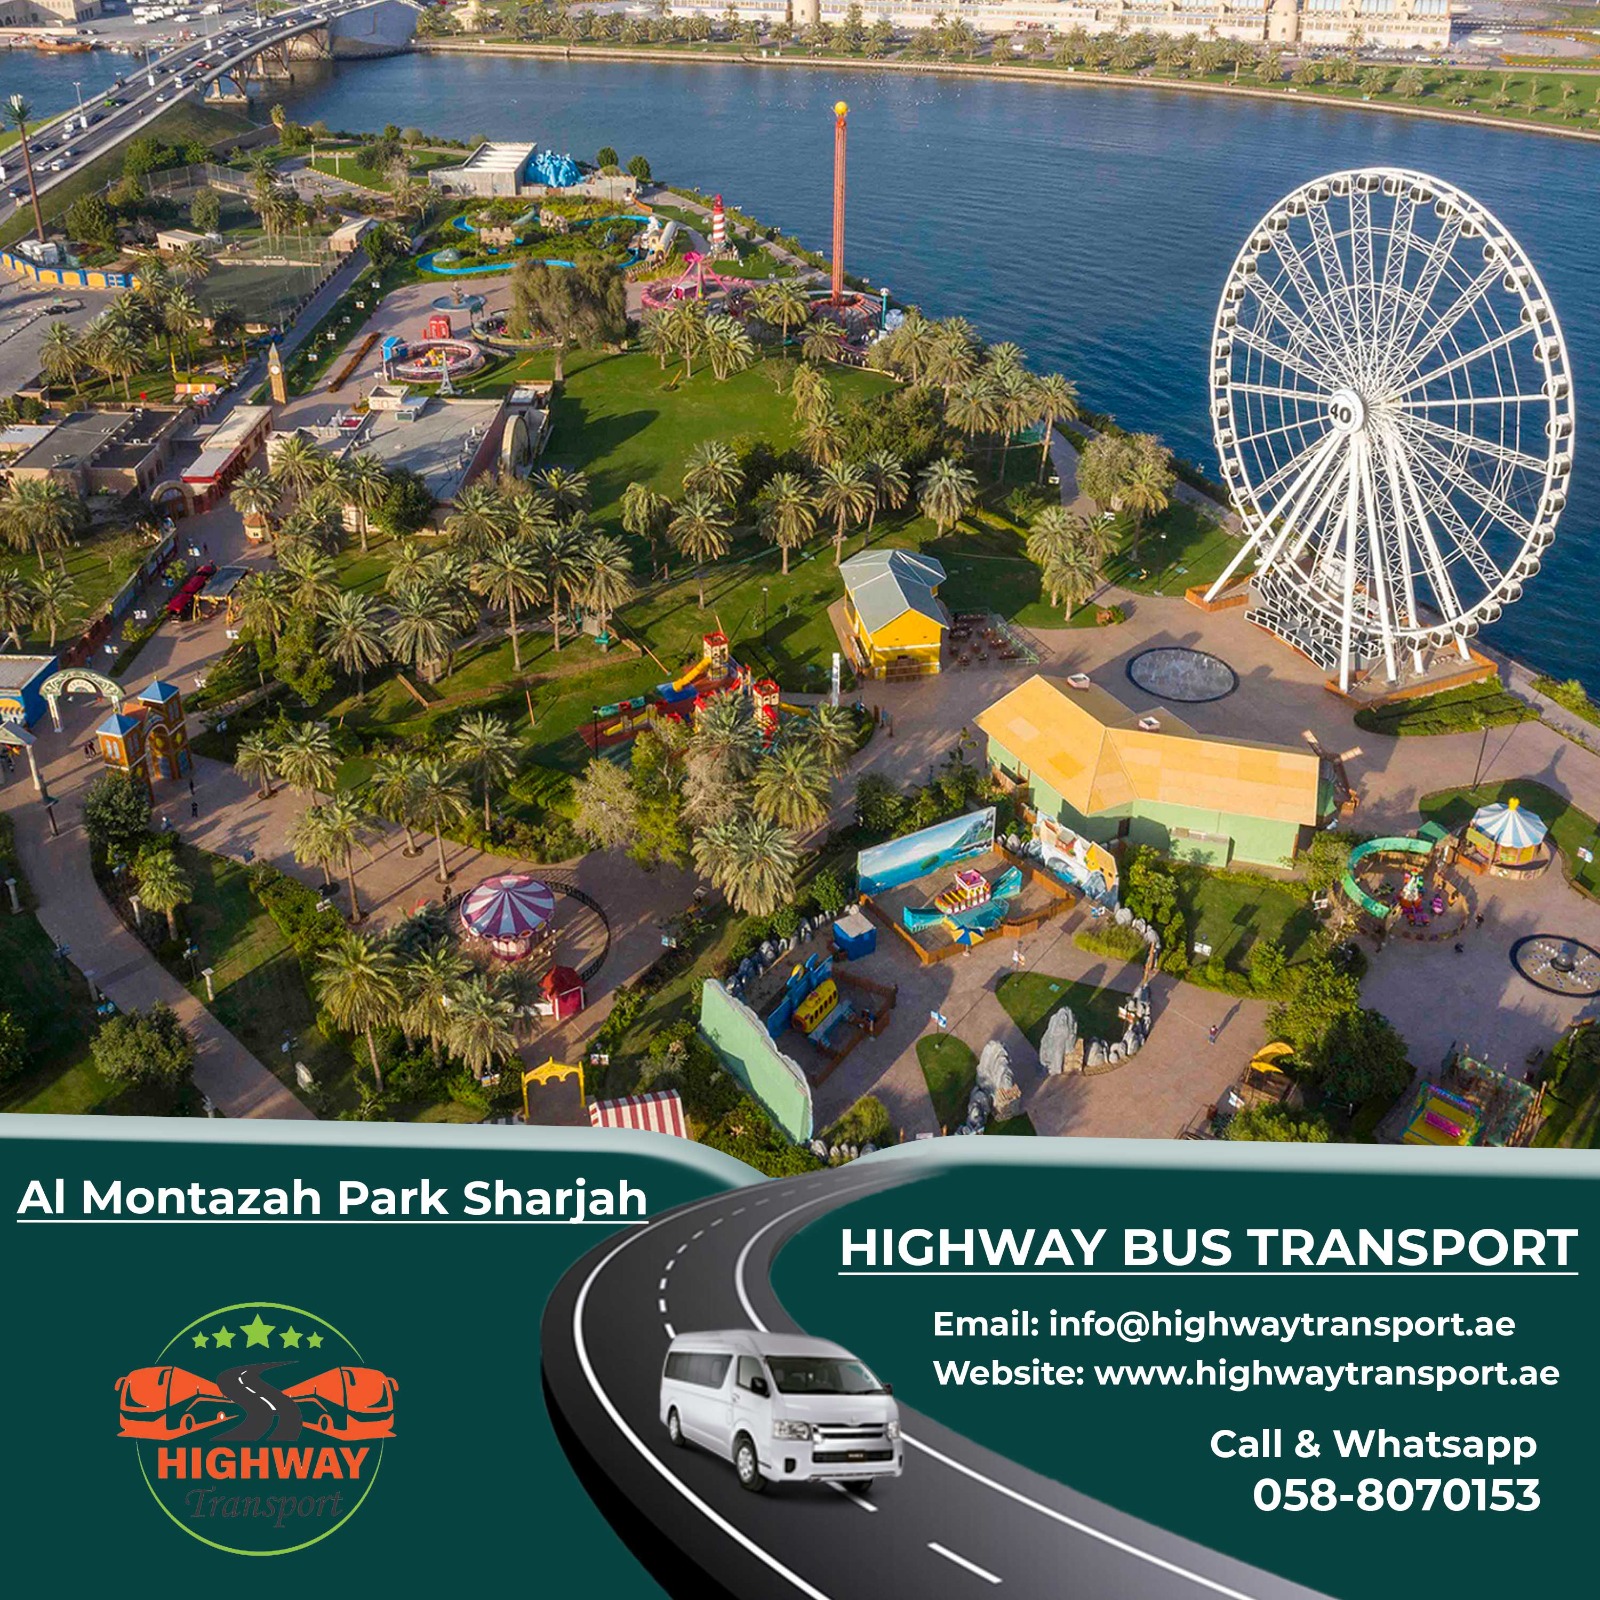 Al Montazah Parks in Sharjah featuring Montazah Park, Al Montazah Amusement and Water Park, and Sharjah Montazah attractions